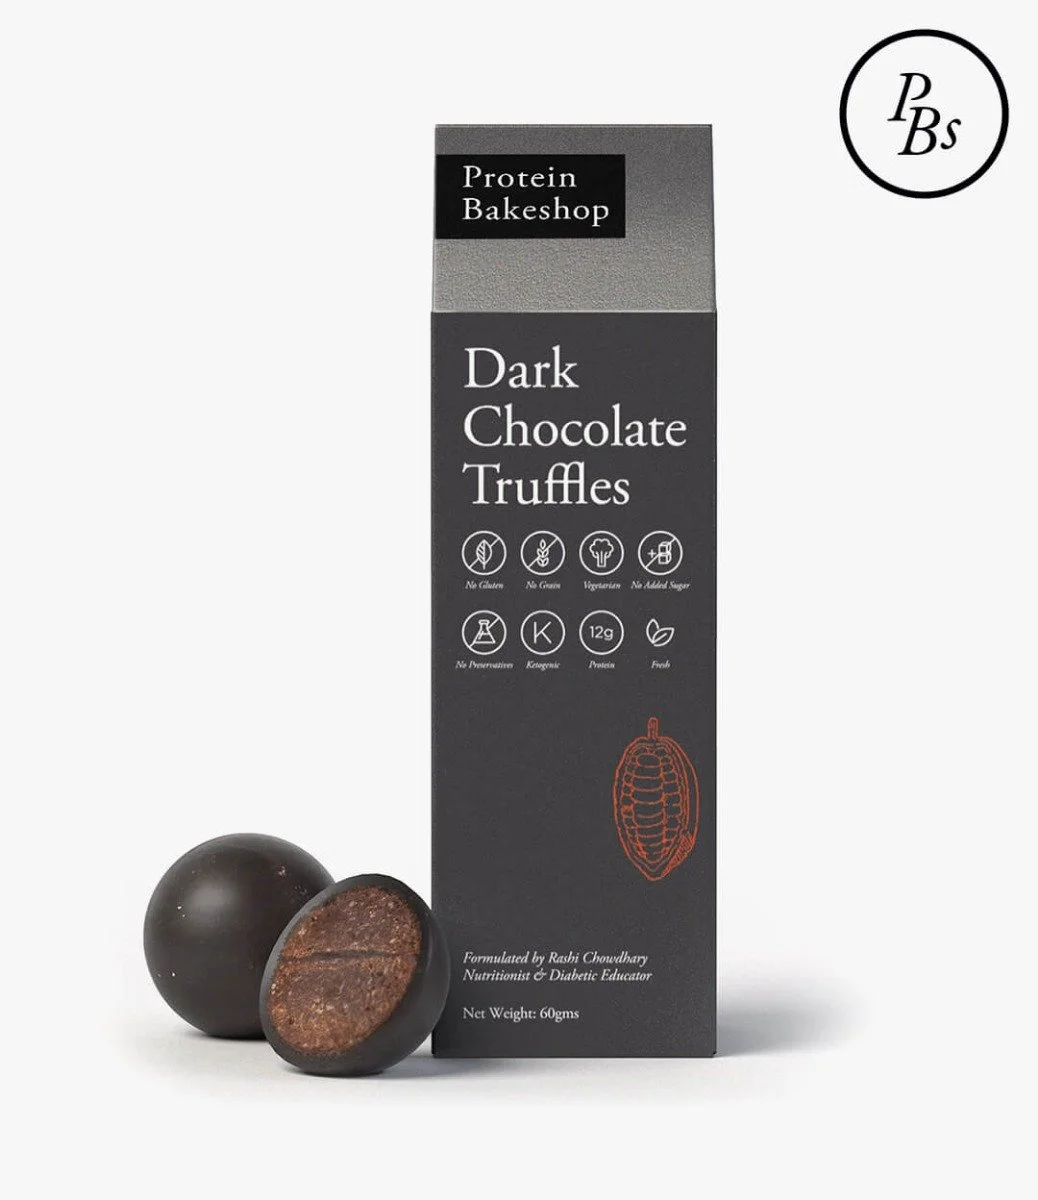 Dark Chocolate Truffles by Protein Bakeshop 